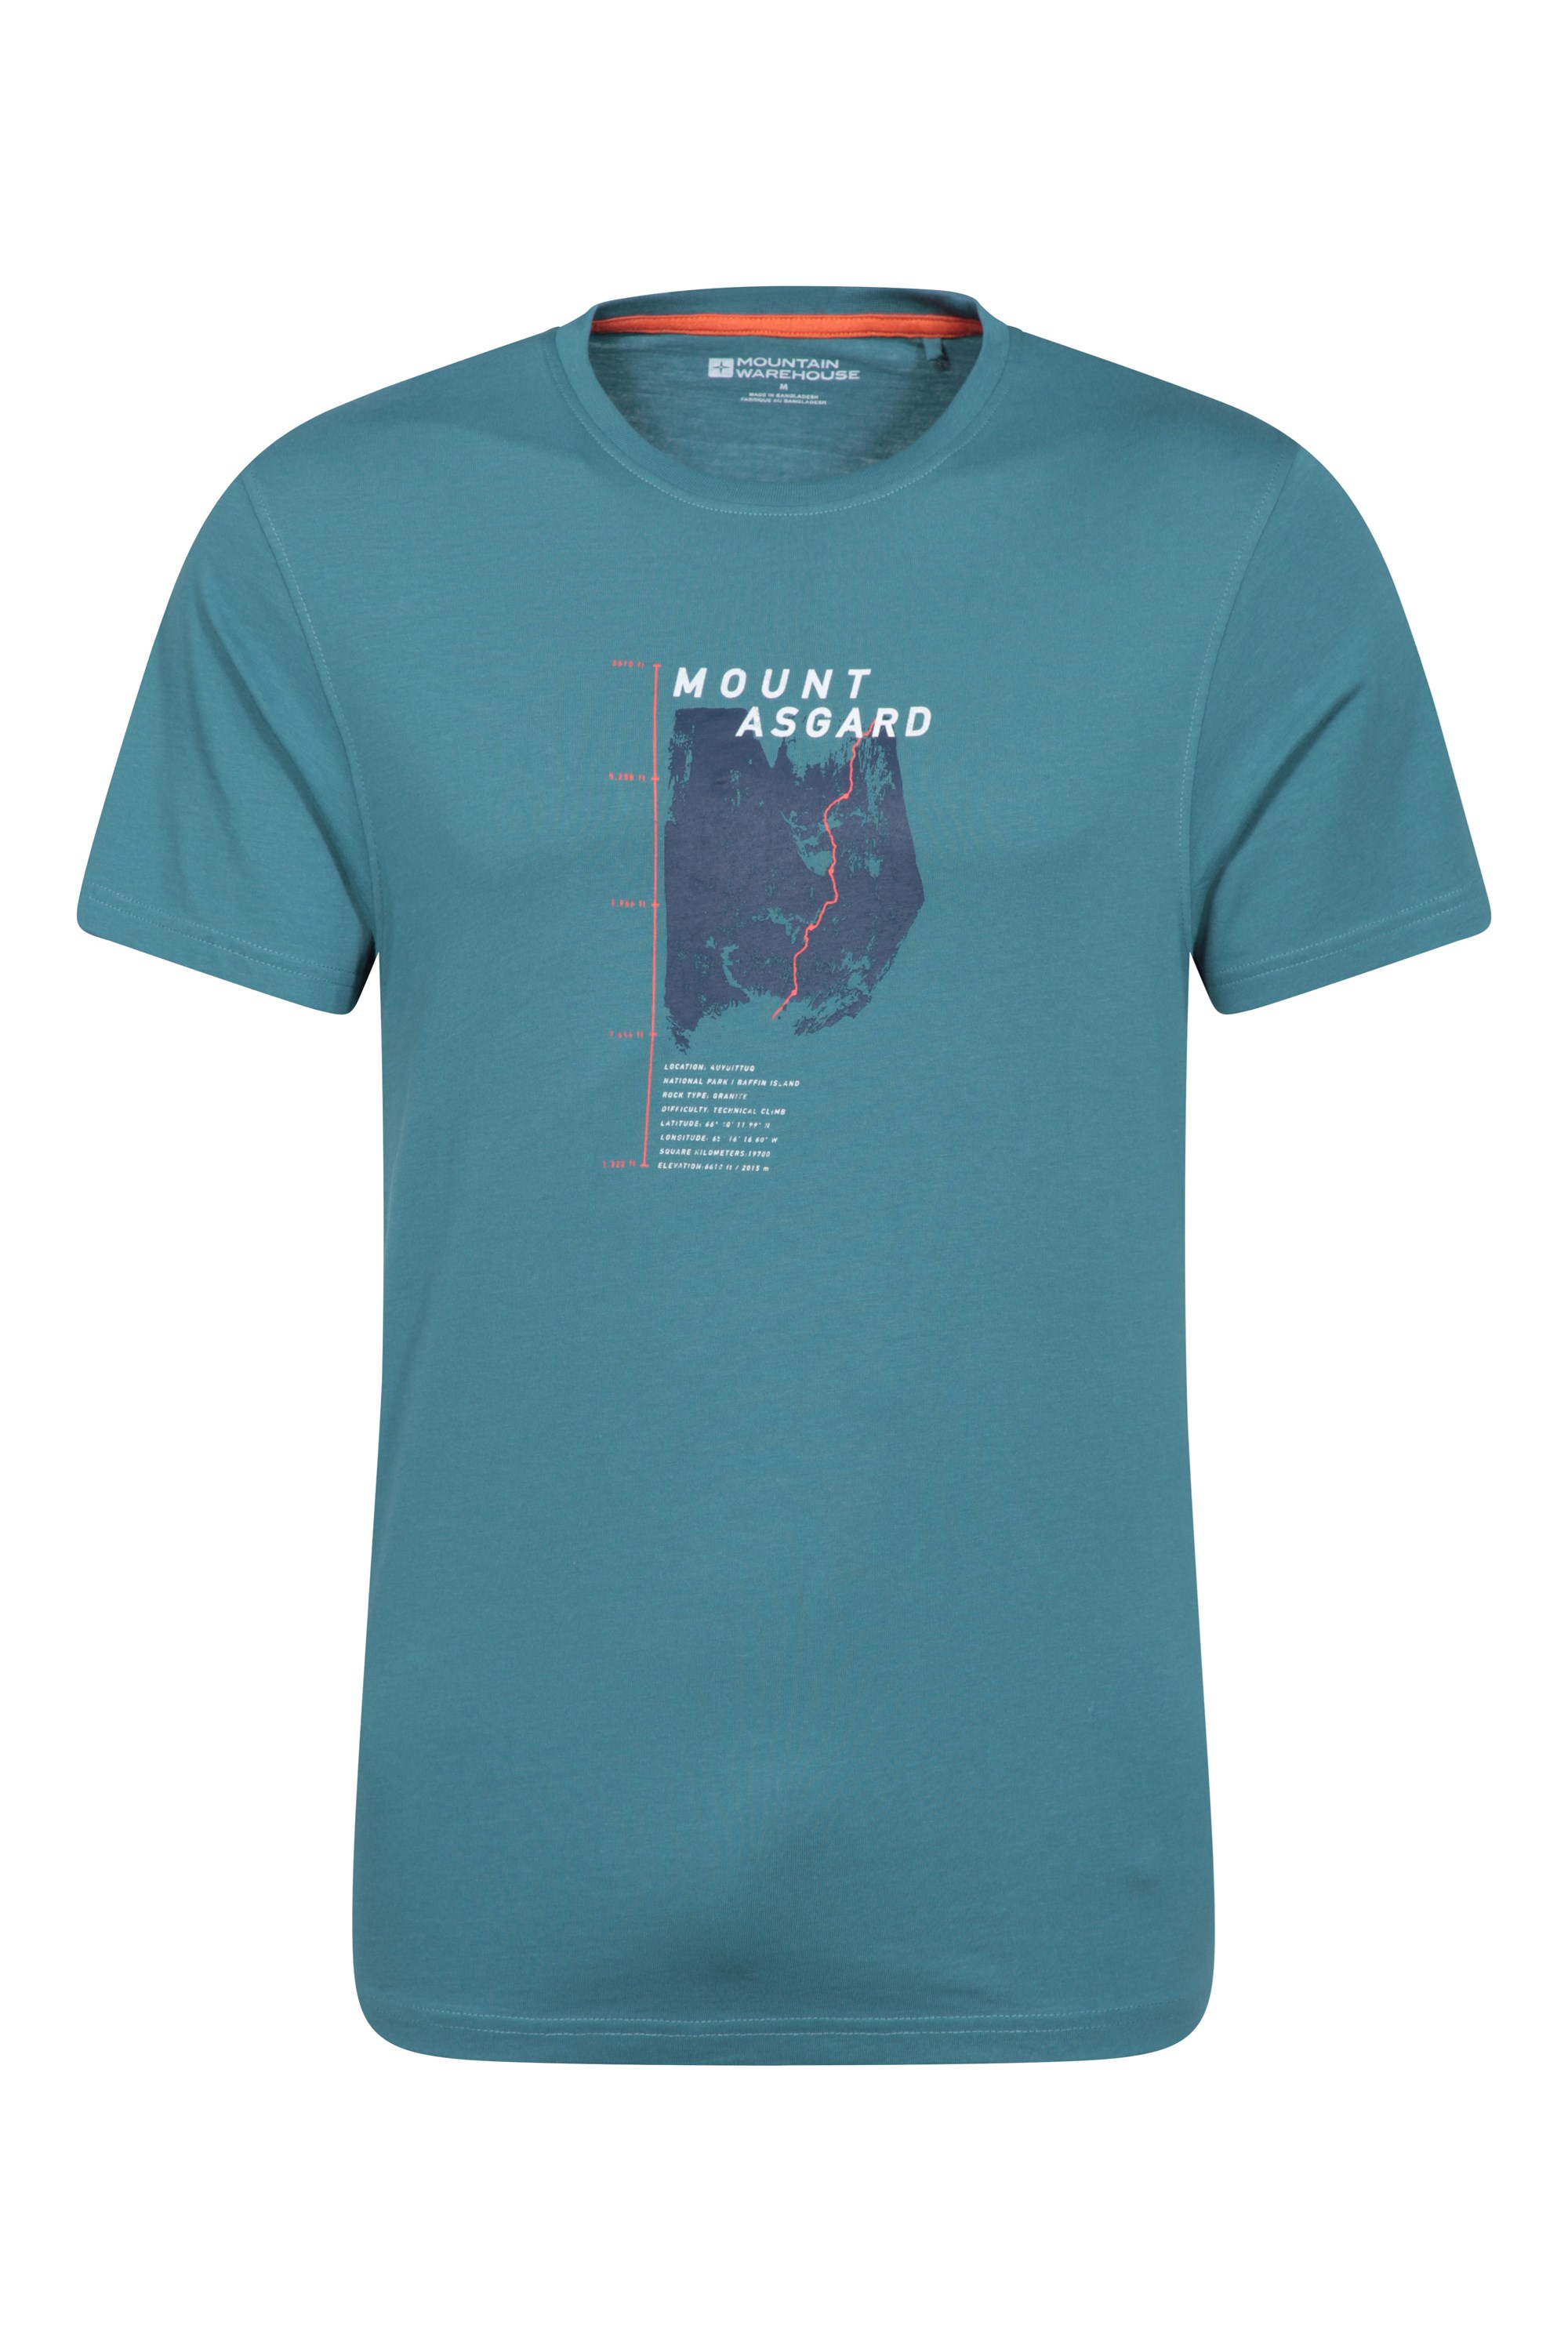 T-Shirt Mount Asgard Homme - Sarcelle